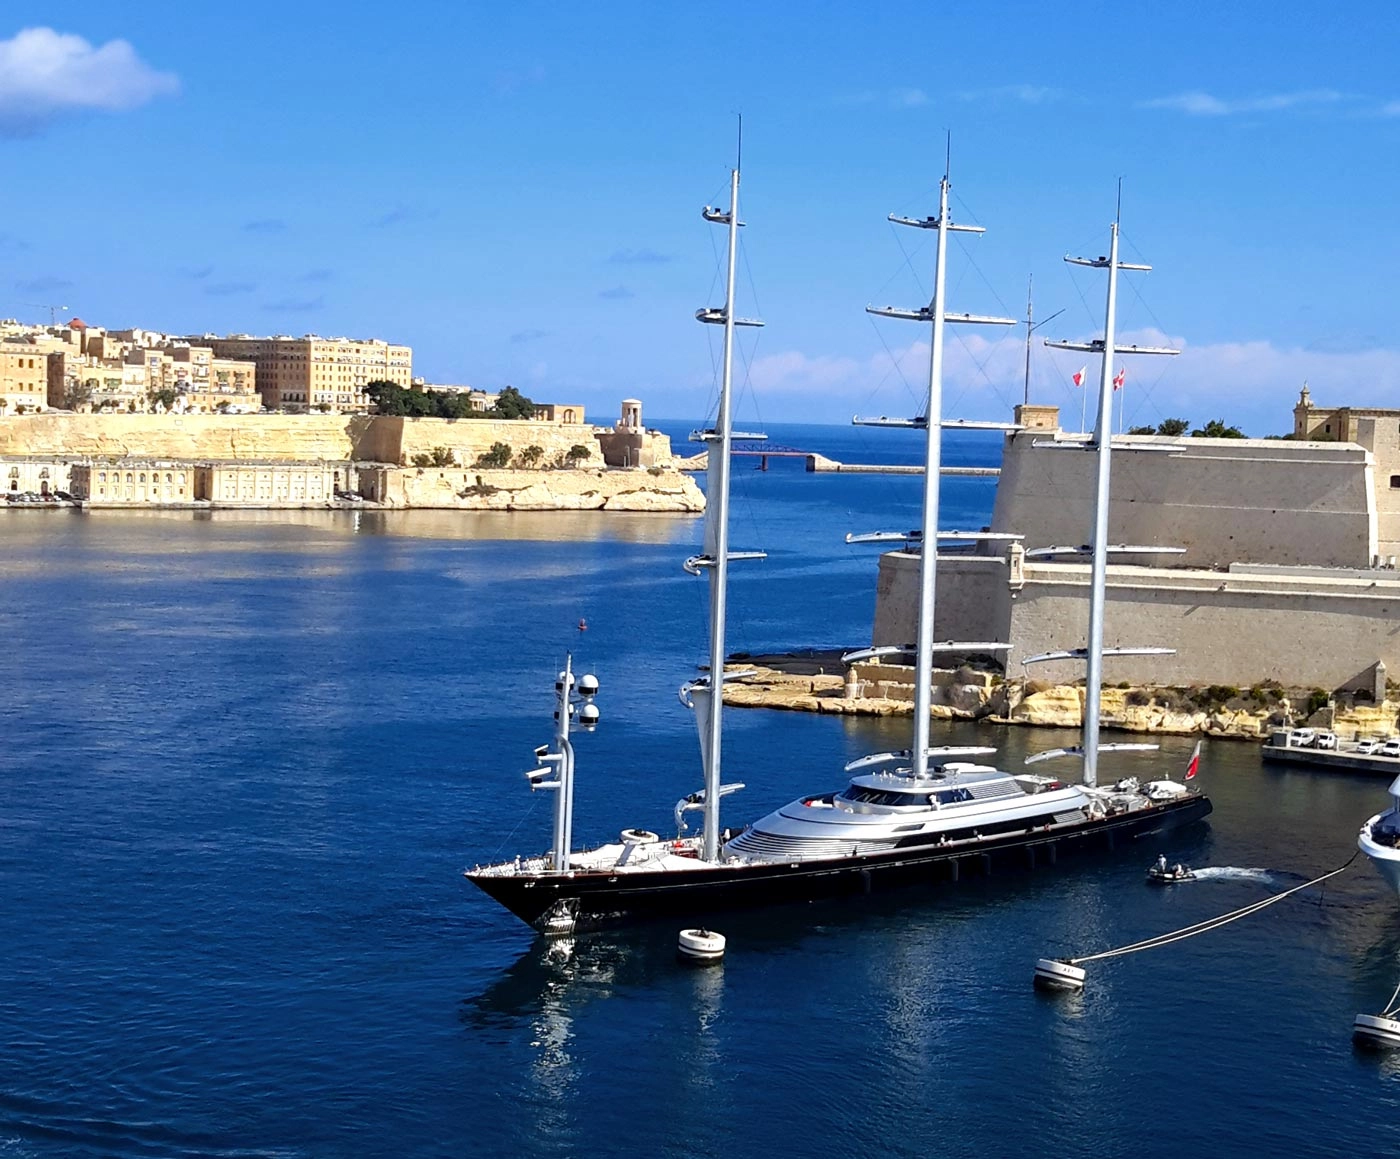 Luxury Yacht "Maltese Falcon" Graces Funchal Harbor